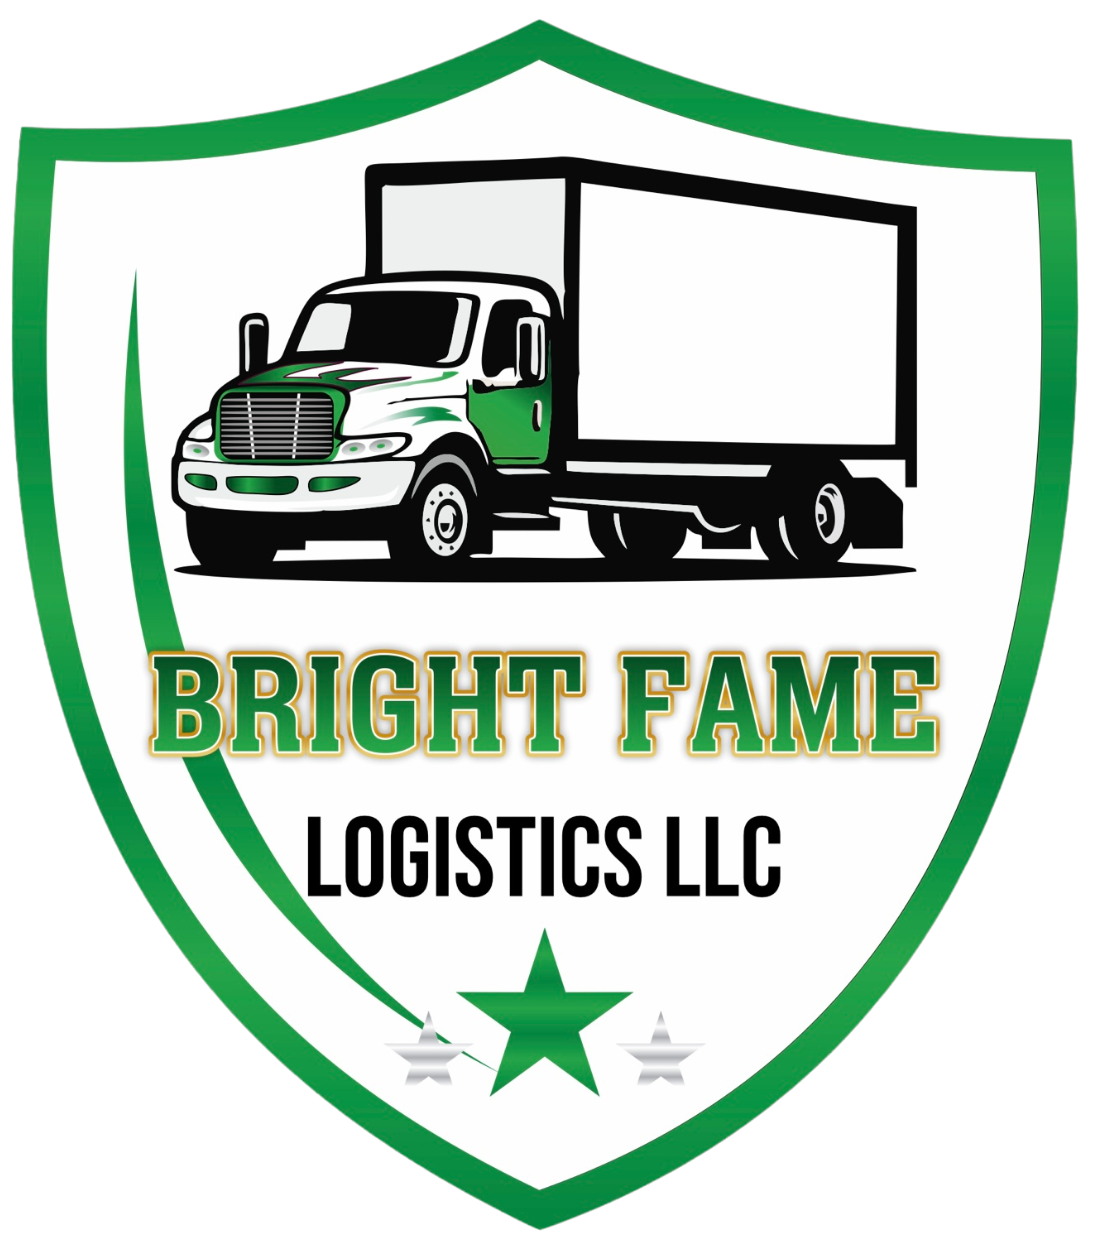 Bright Fame logistics